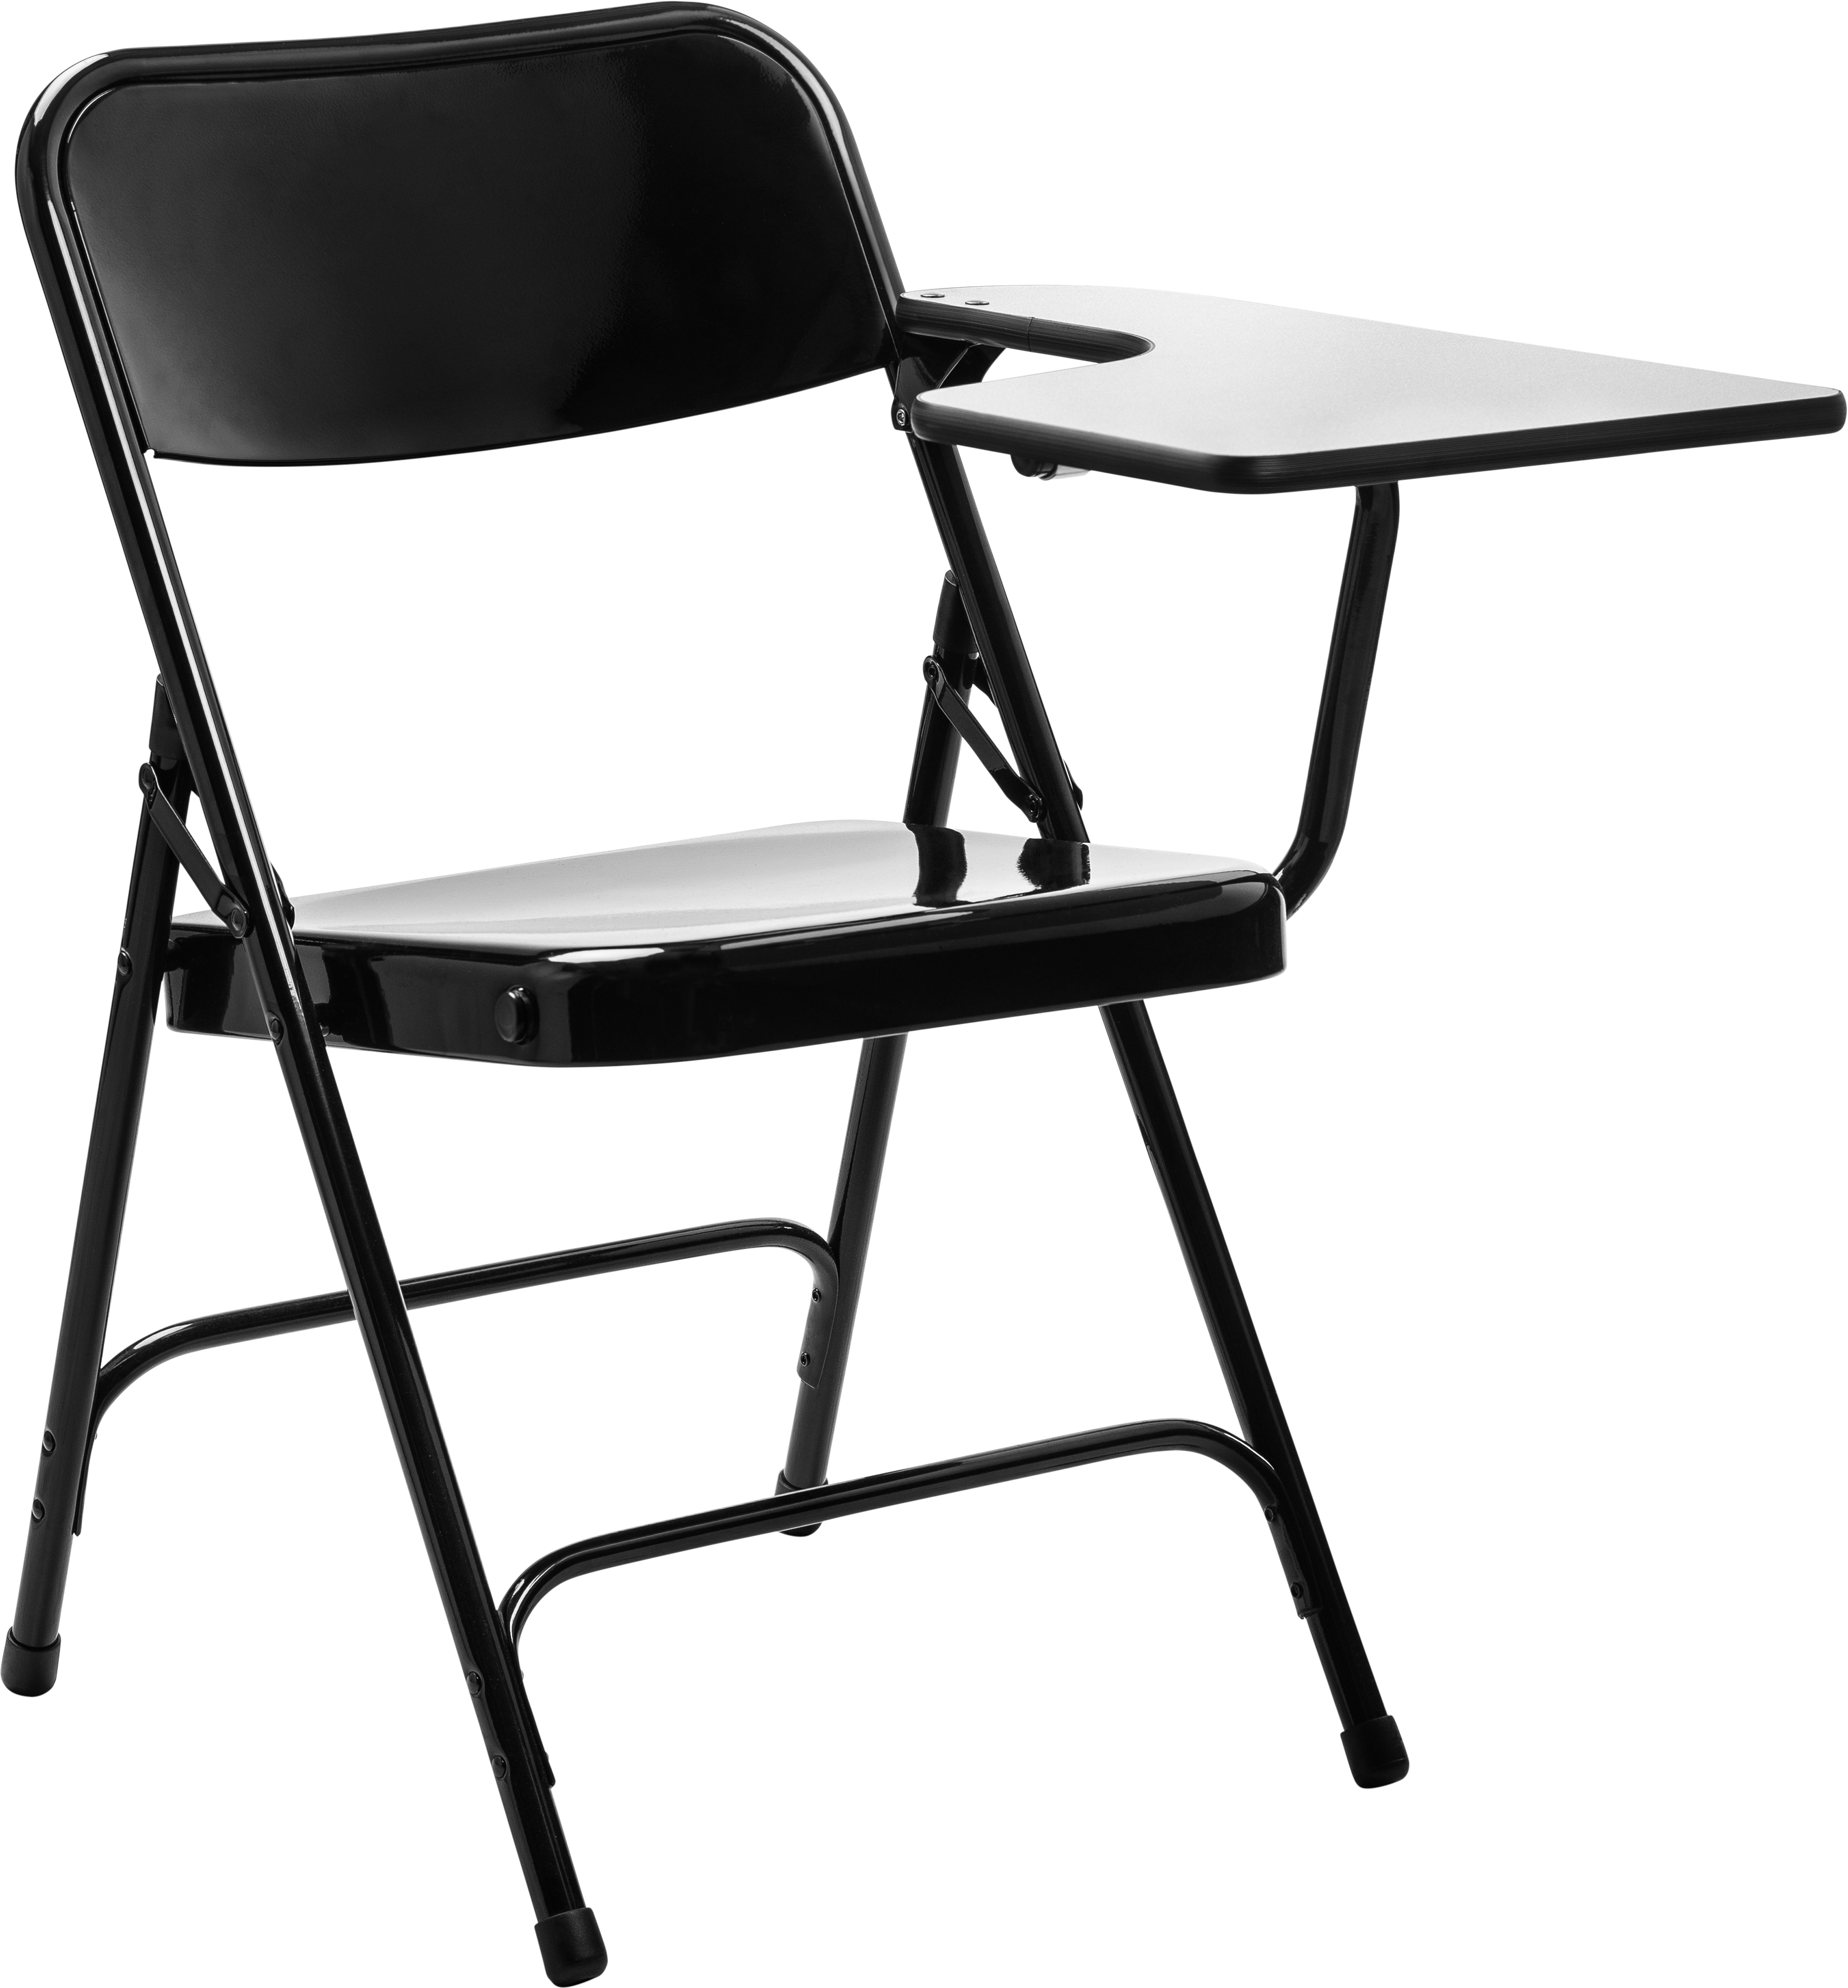 Steel Folding Chair Optional Arm Tablet